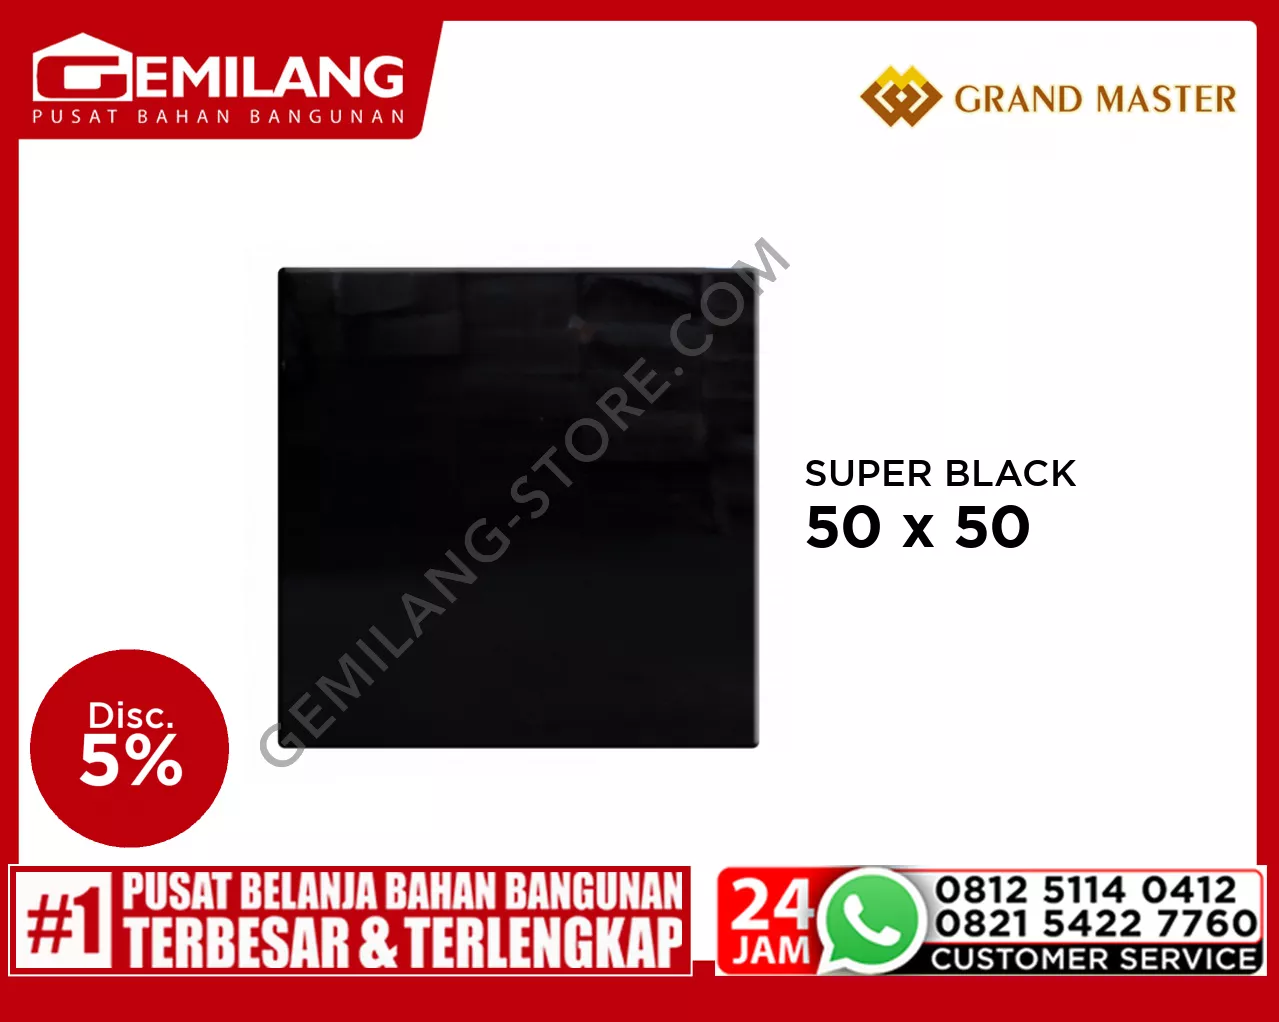 GRAND MASTER SUPER BLACK 50 x 50